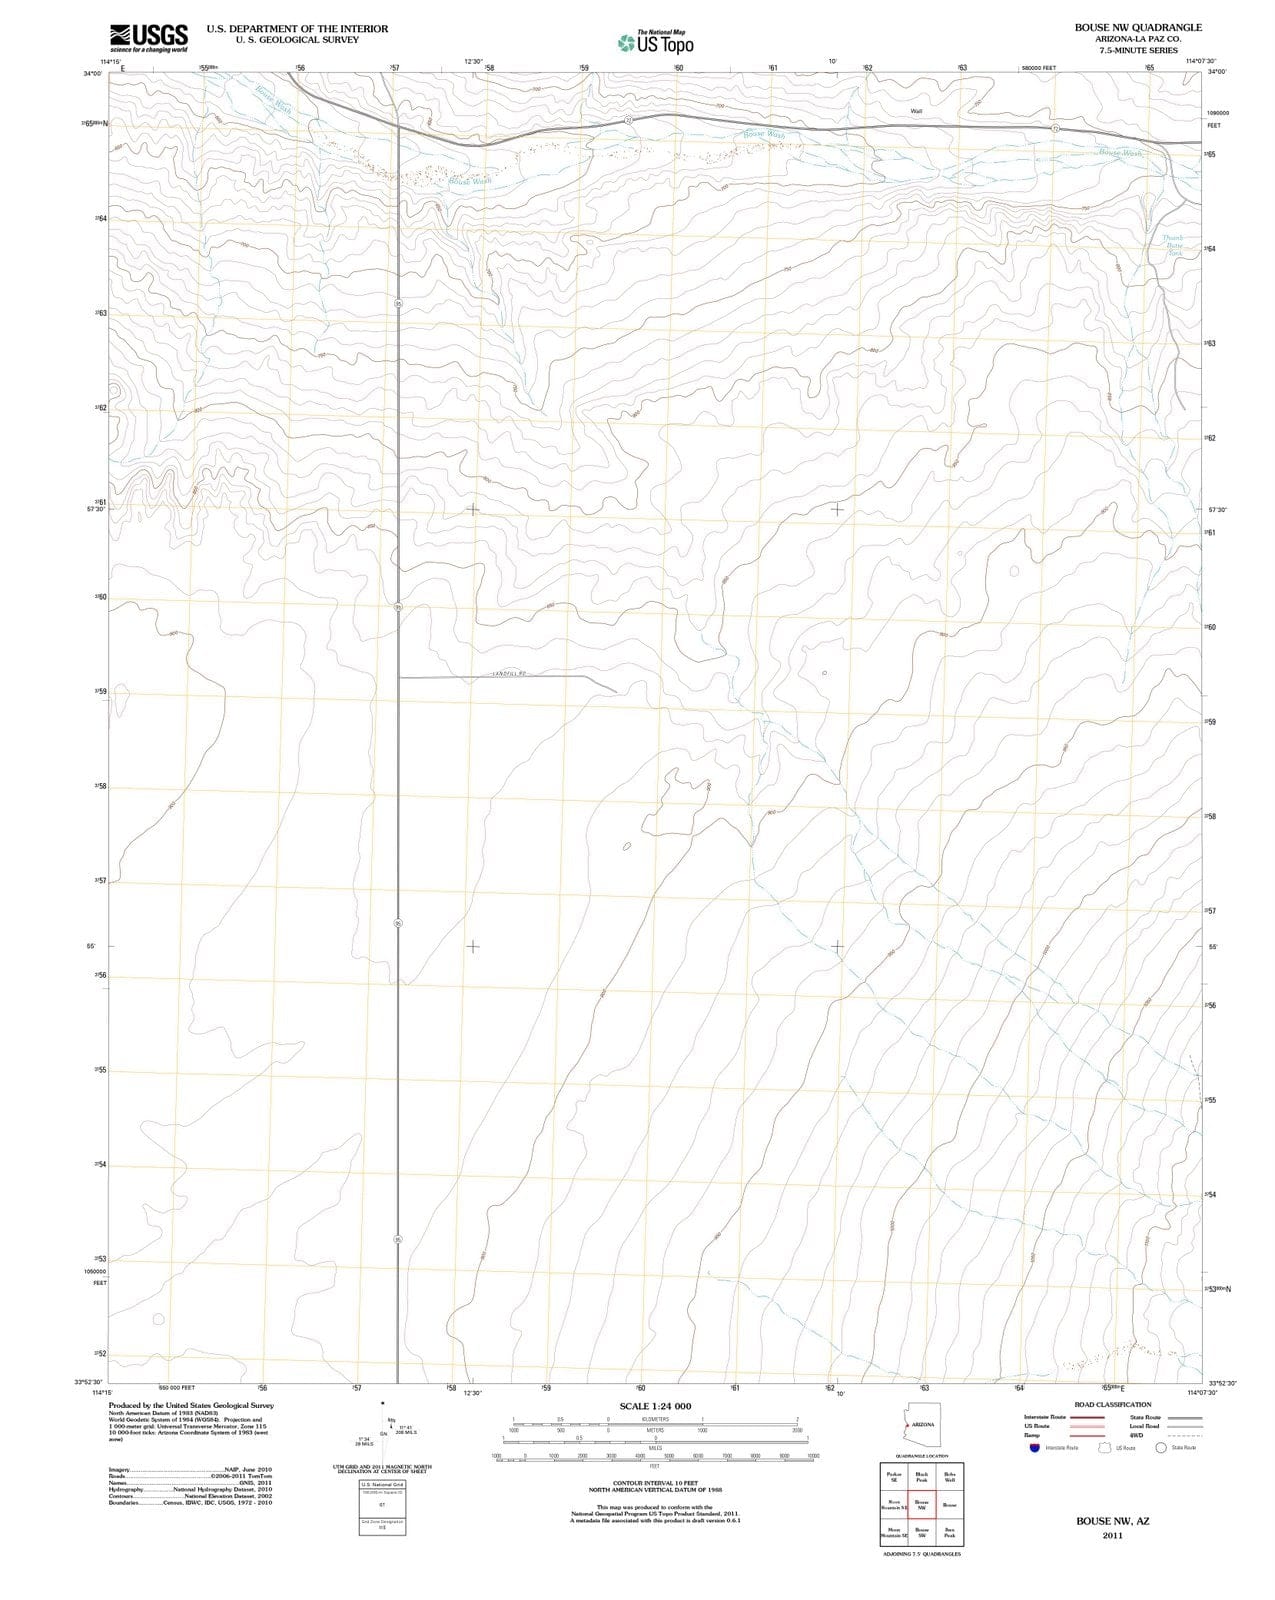 2011 Bouse, AZ - Arizona - USGS Topographic Map v2